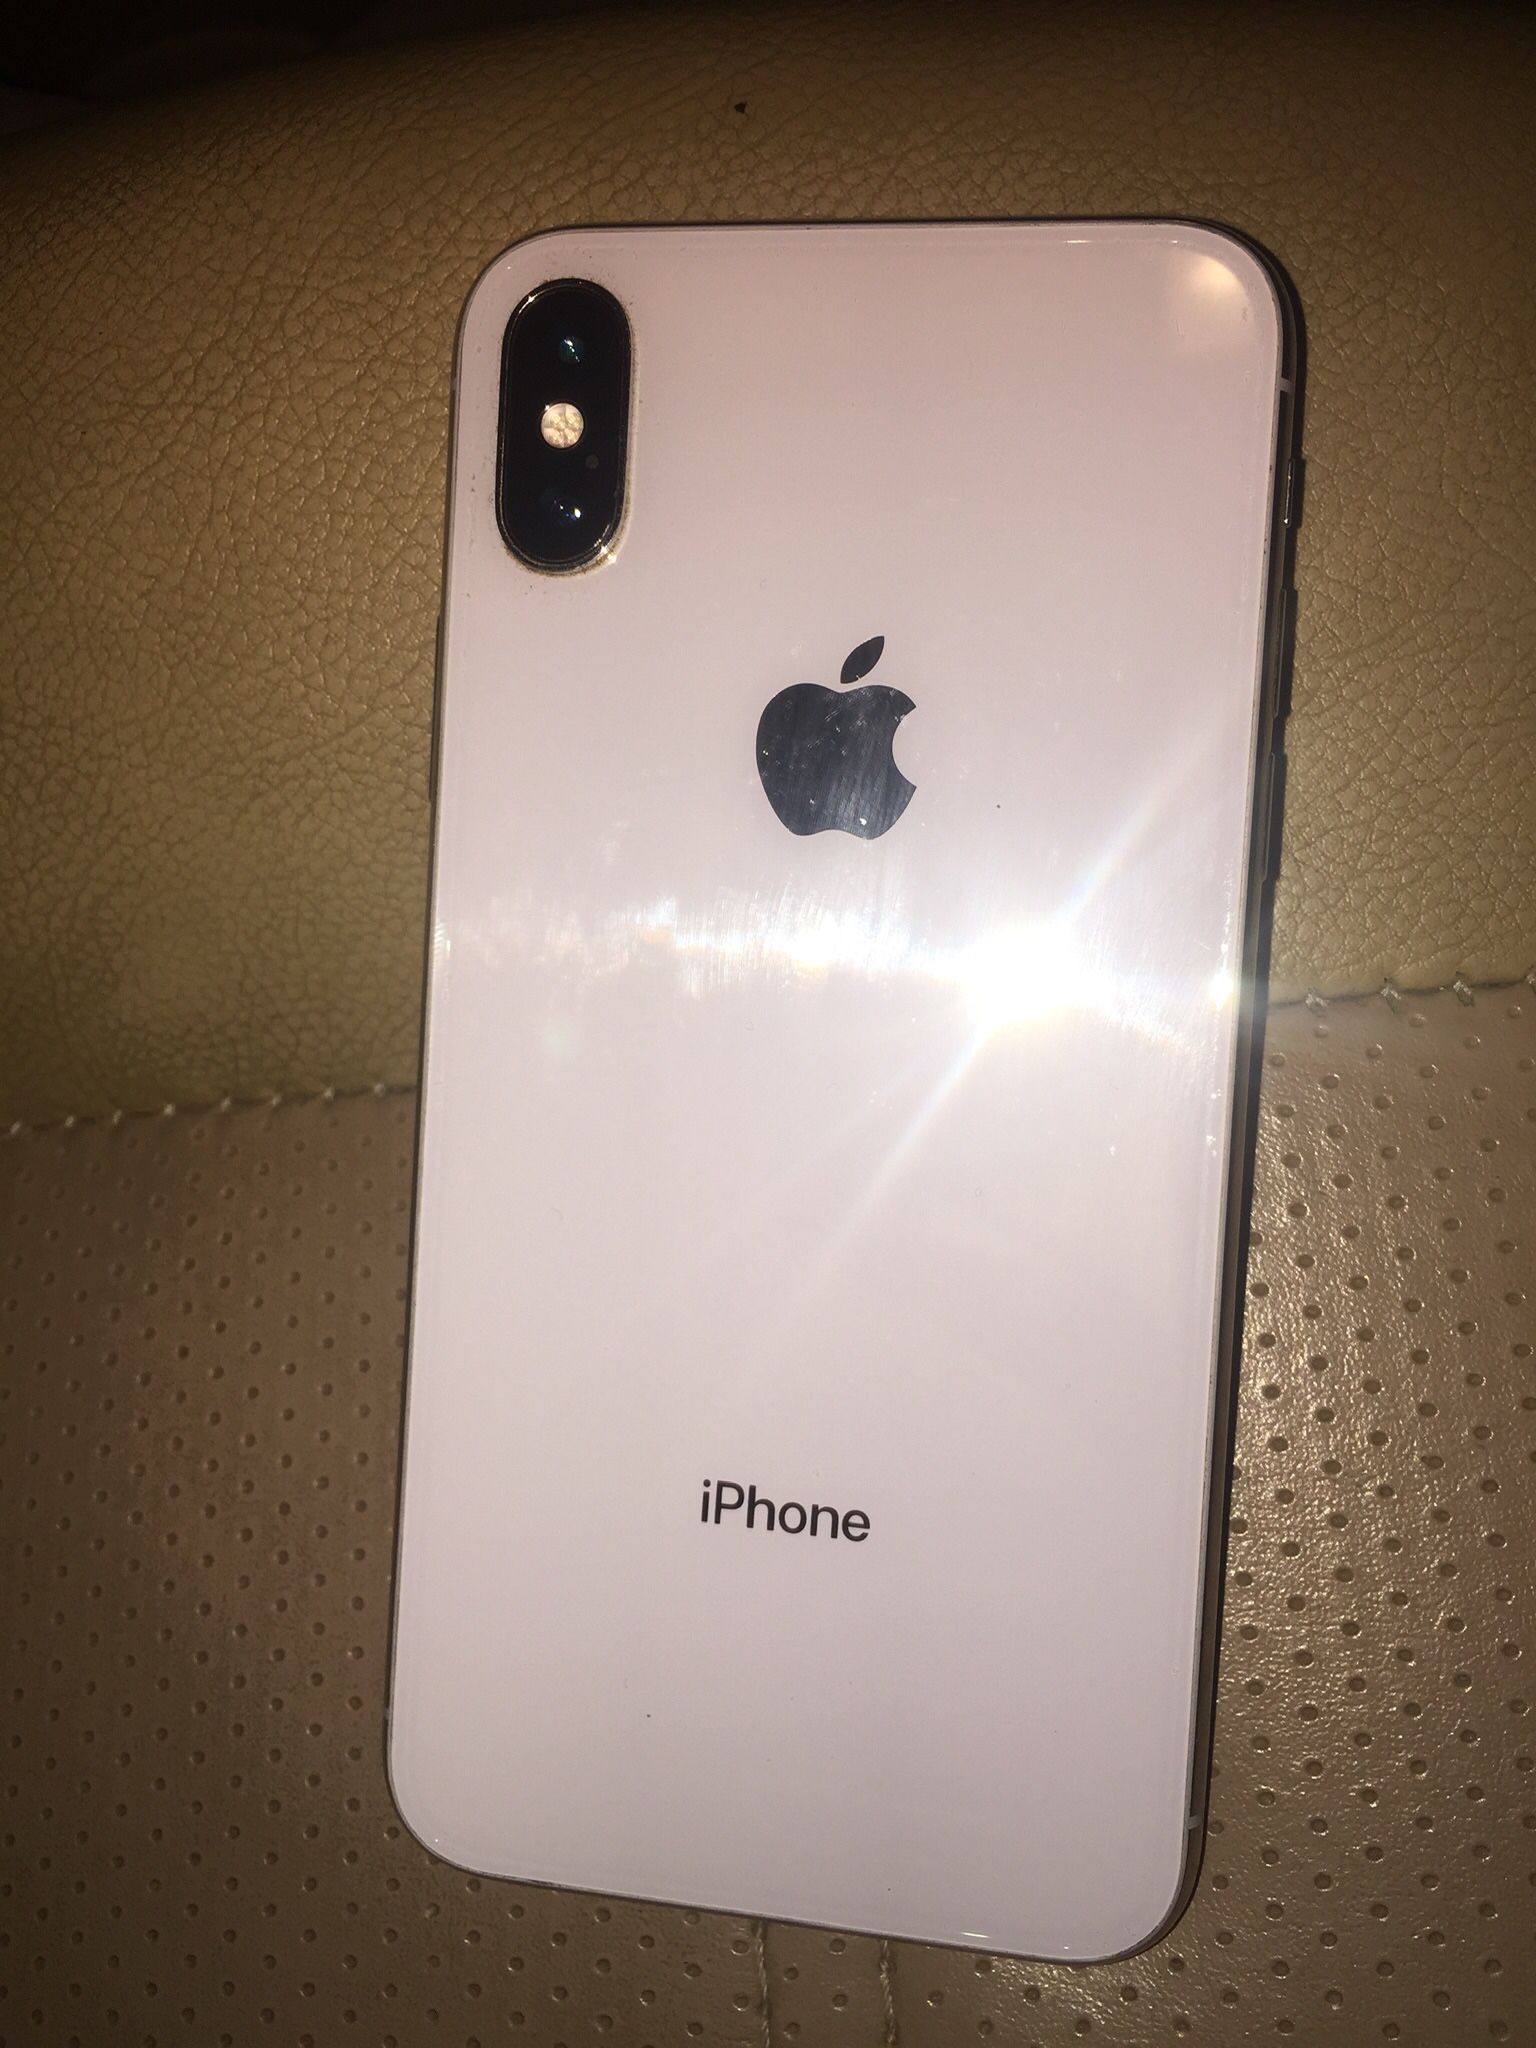 Apple iPhone X - 64GB - Space Gray (Unlocked) A1865 (CDMA + GSM)